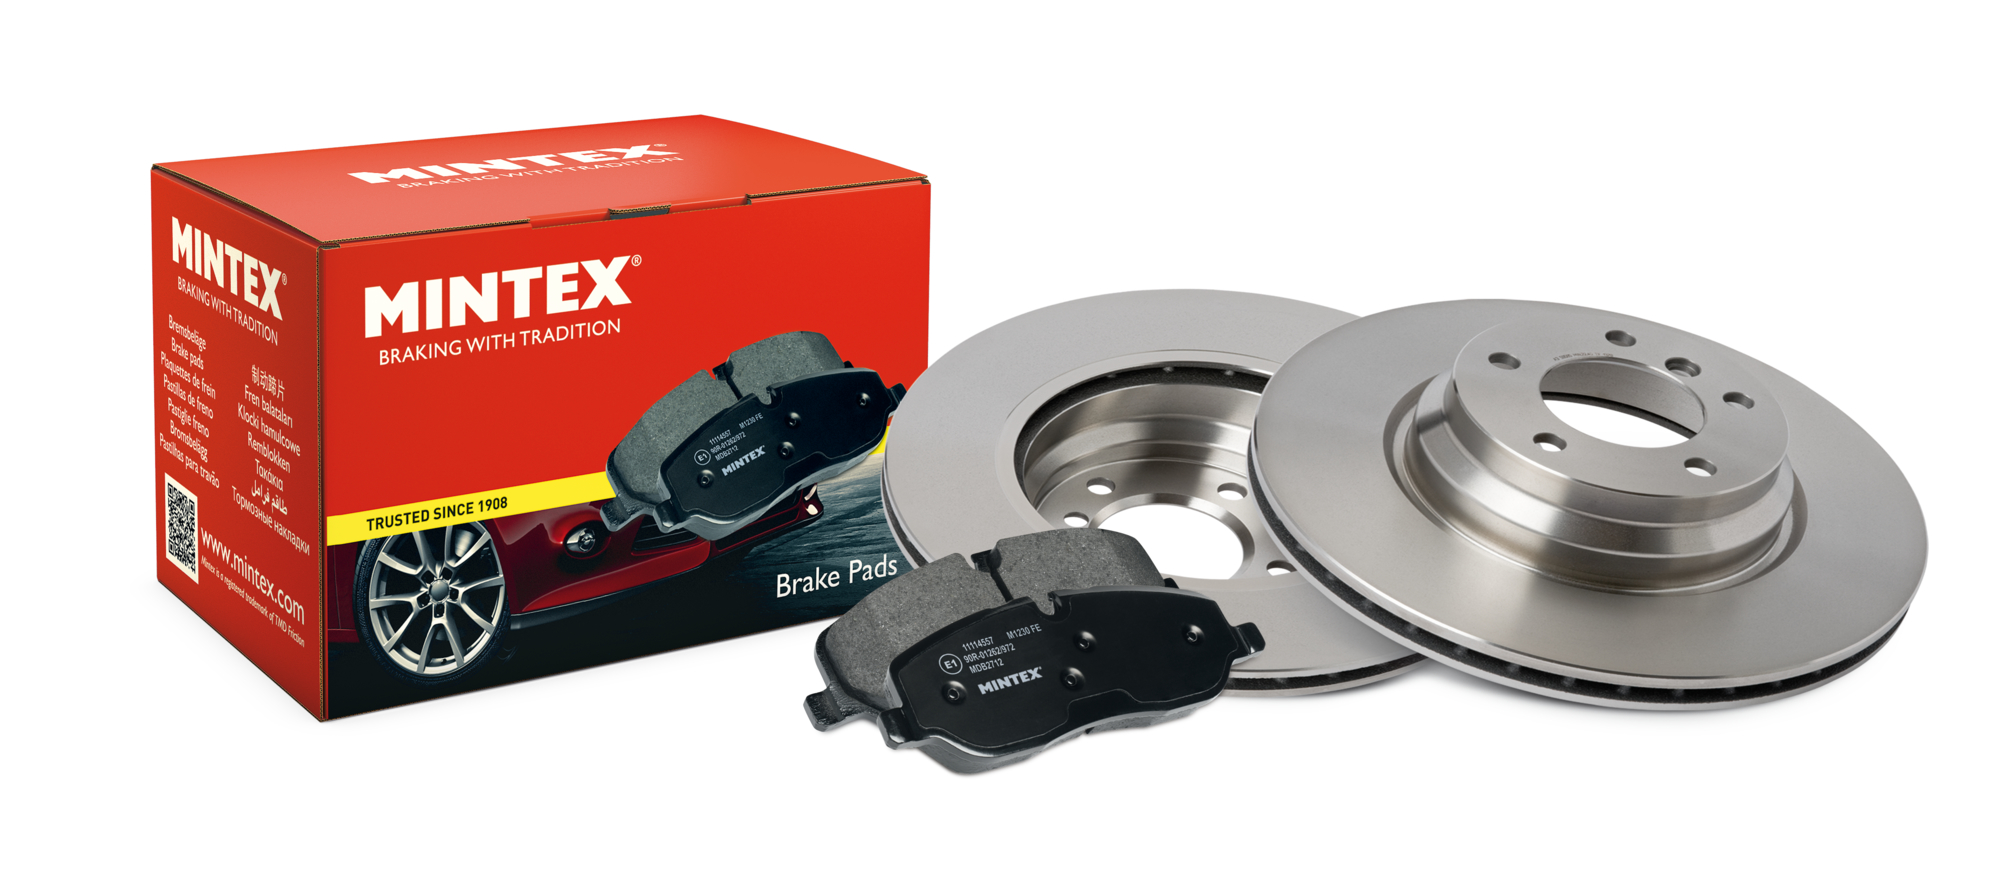 Mintex expands brake disc and pad ranges